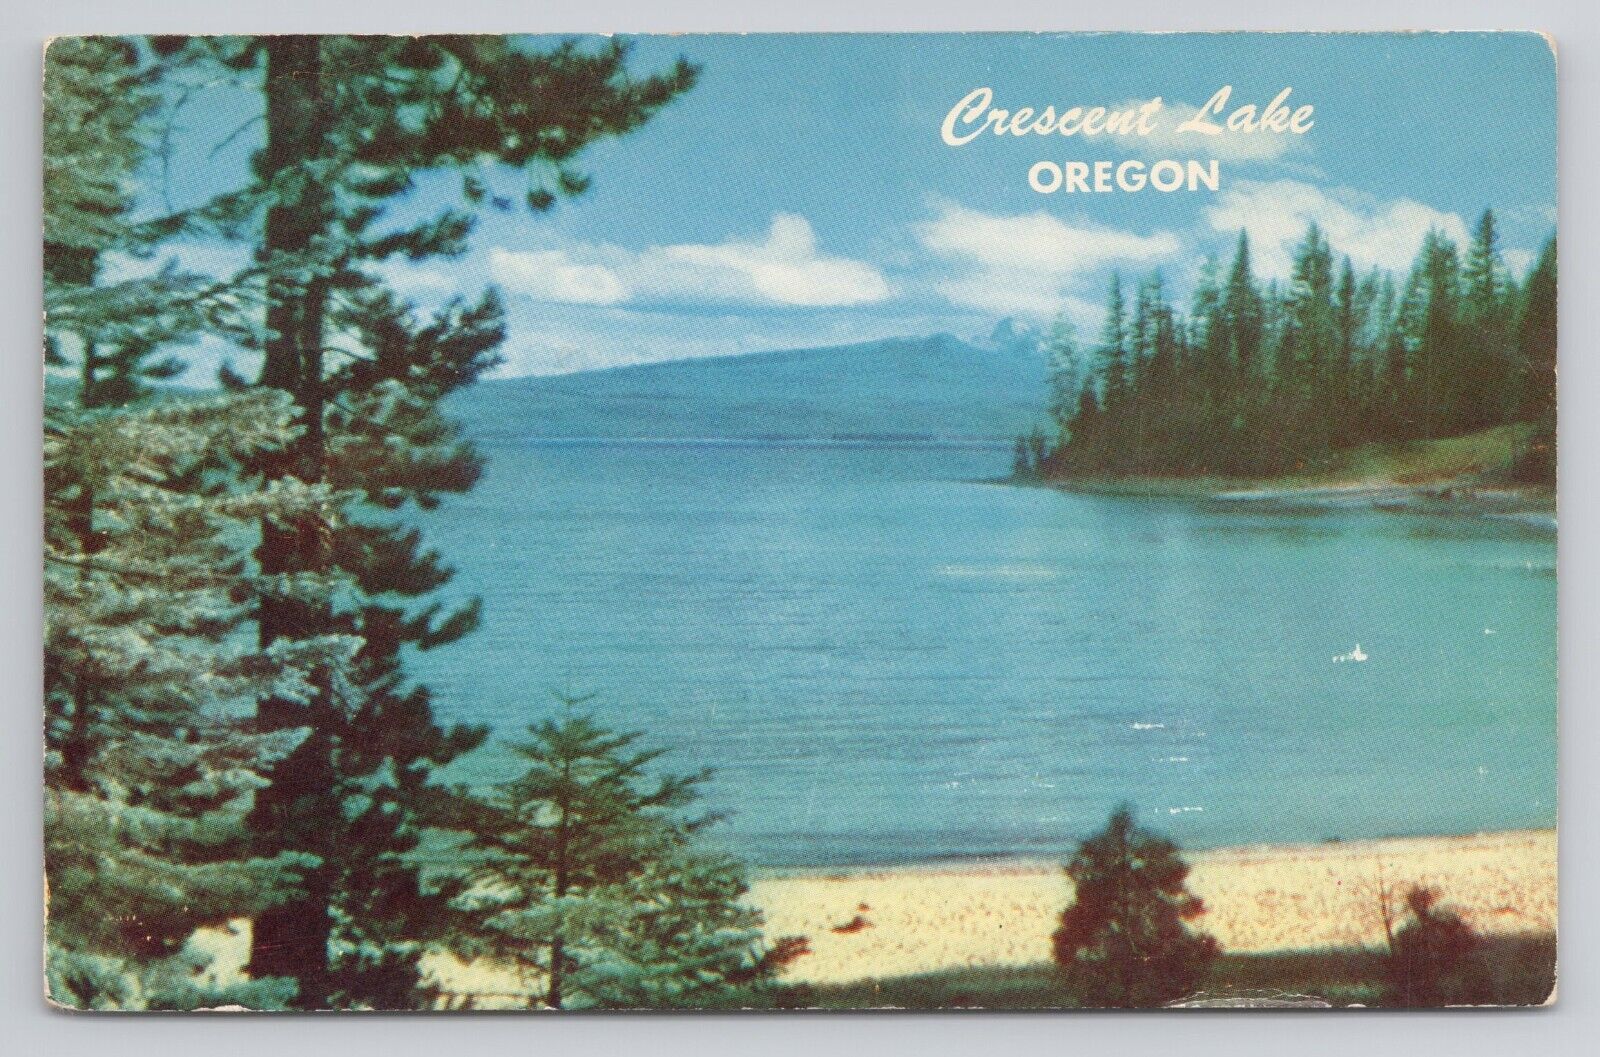 Crescent Lake, Oregon Postcard 3286